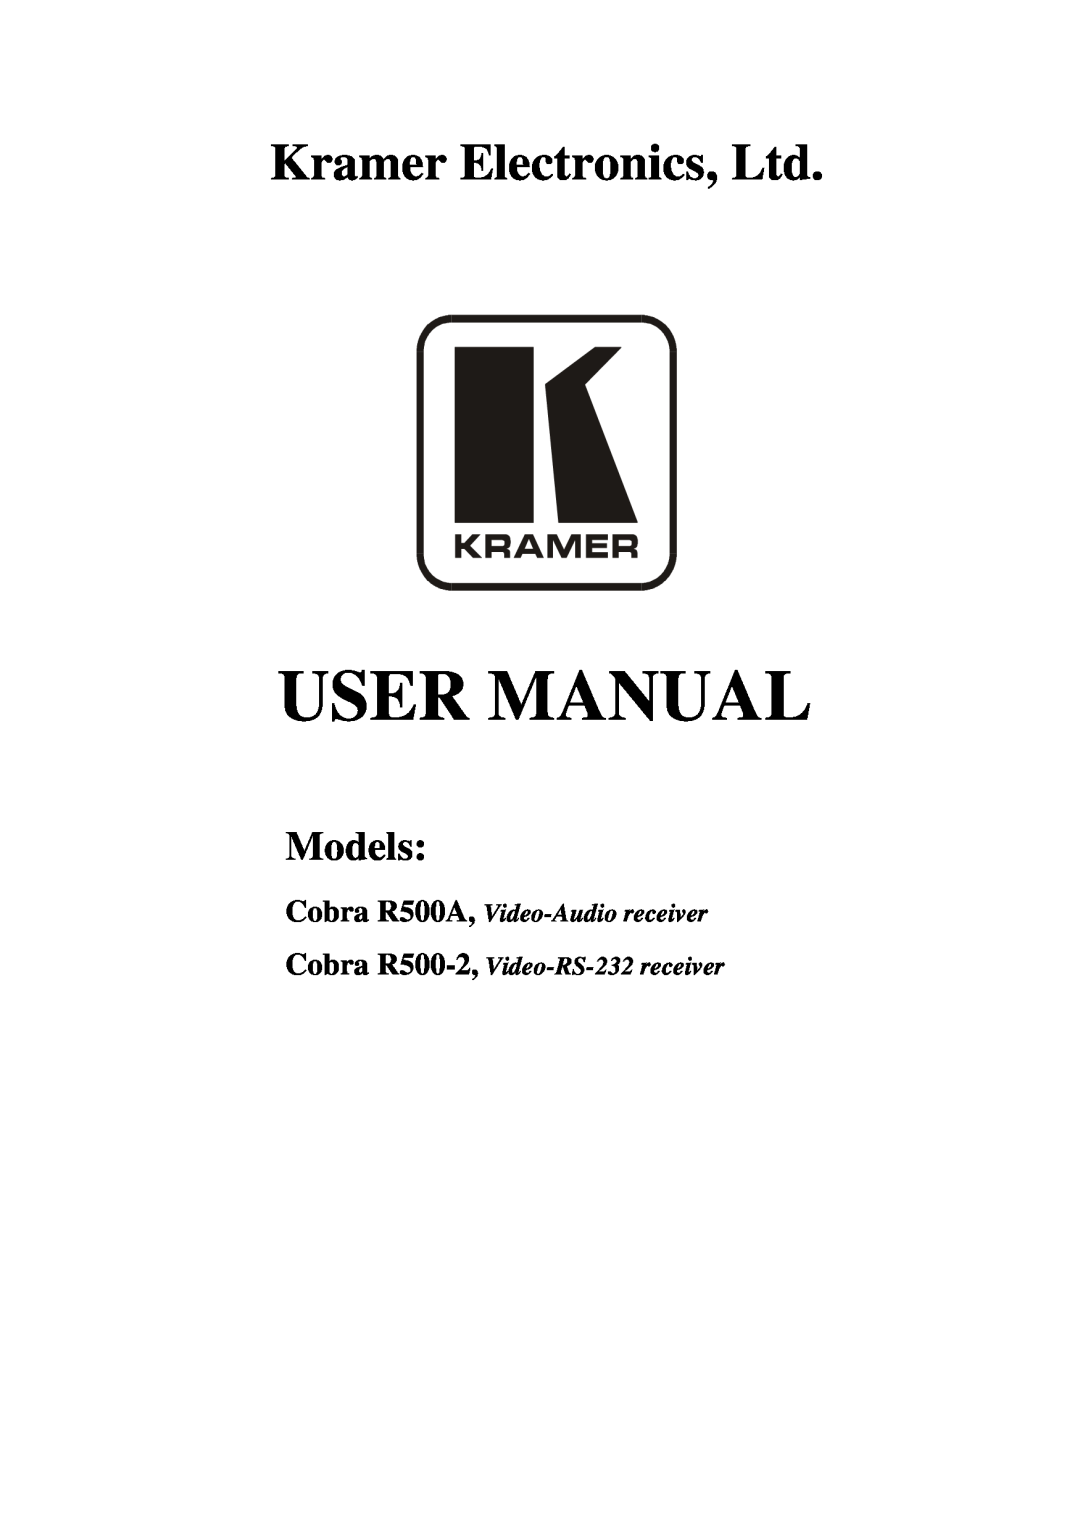 Kramer Electronics COBRA R500-2, COBRA R500A user manual Models 